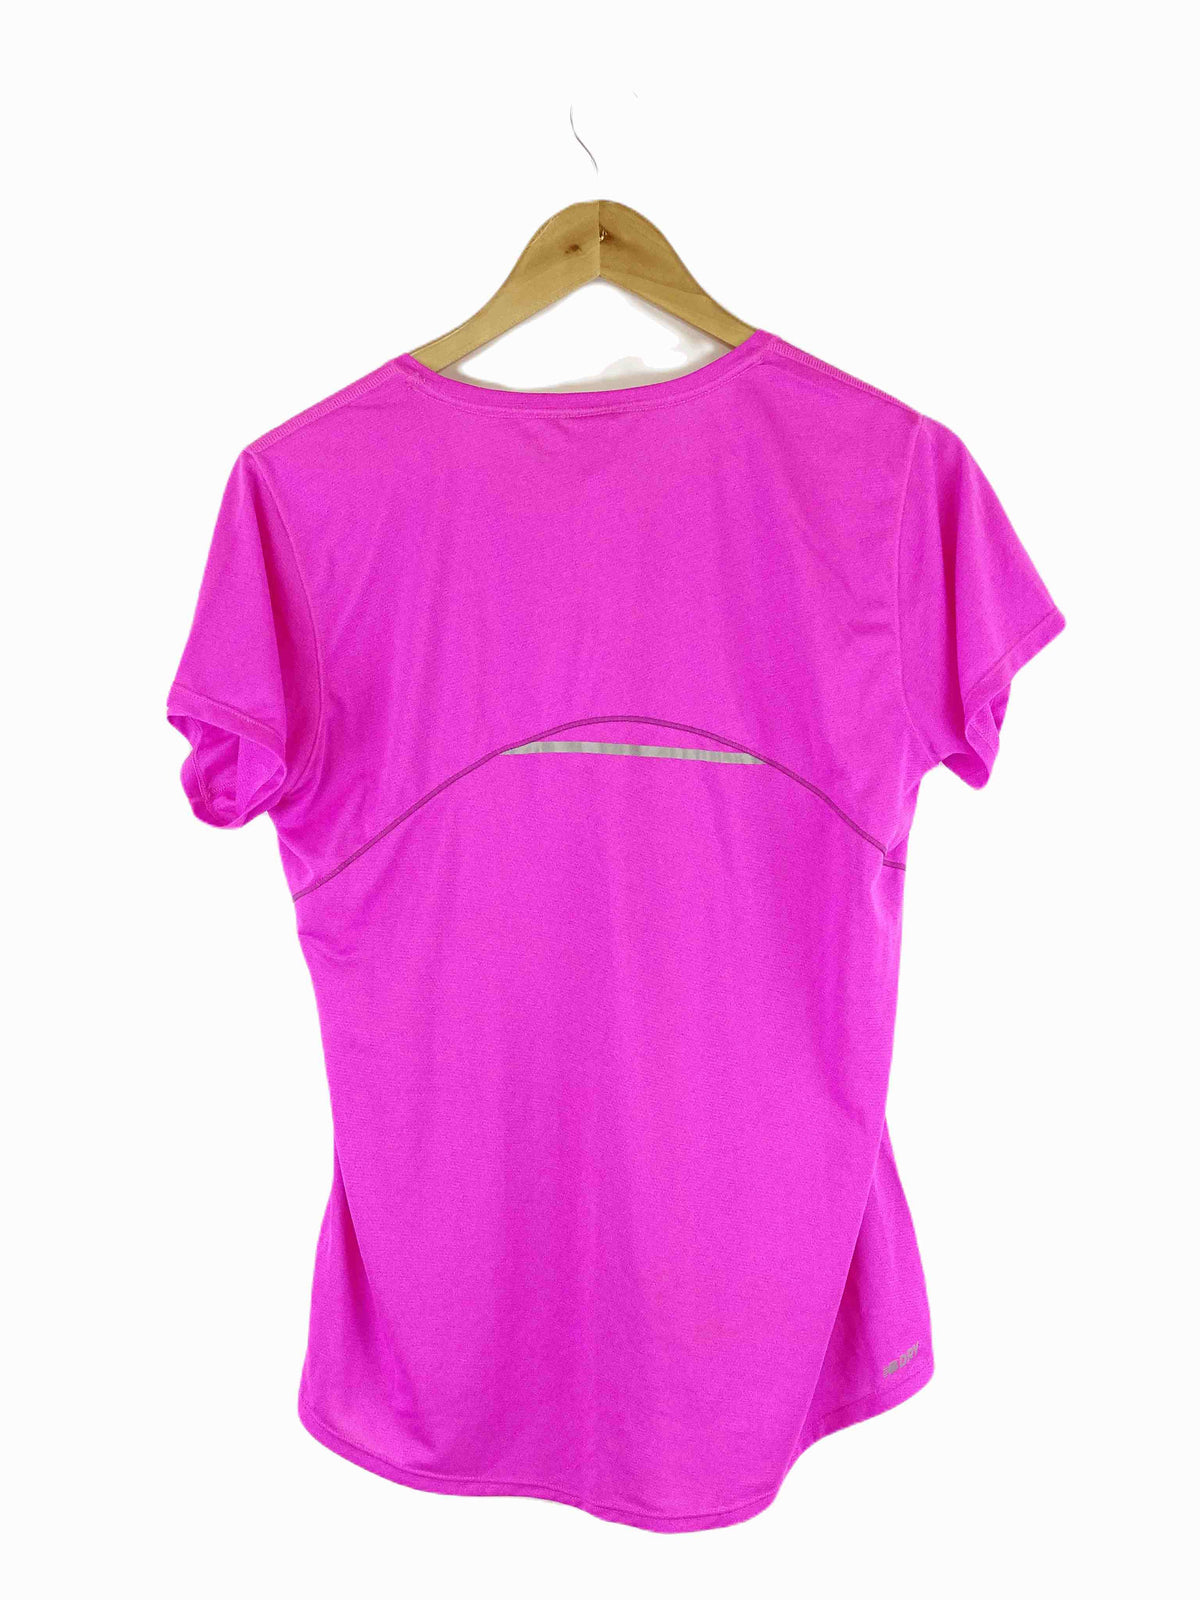 New Balance Pink T-shirt L